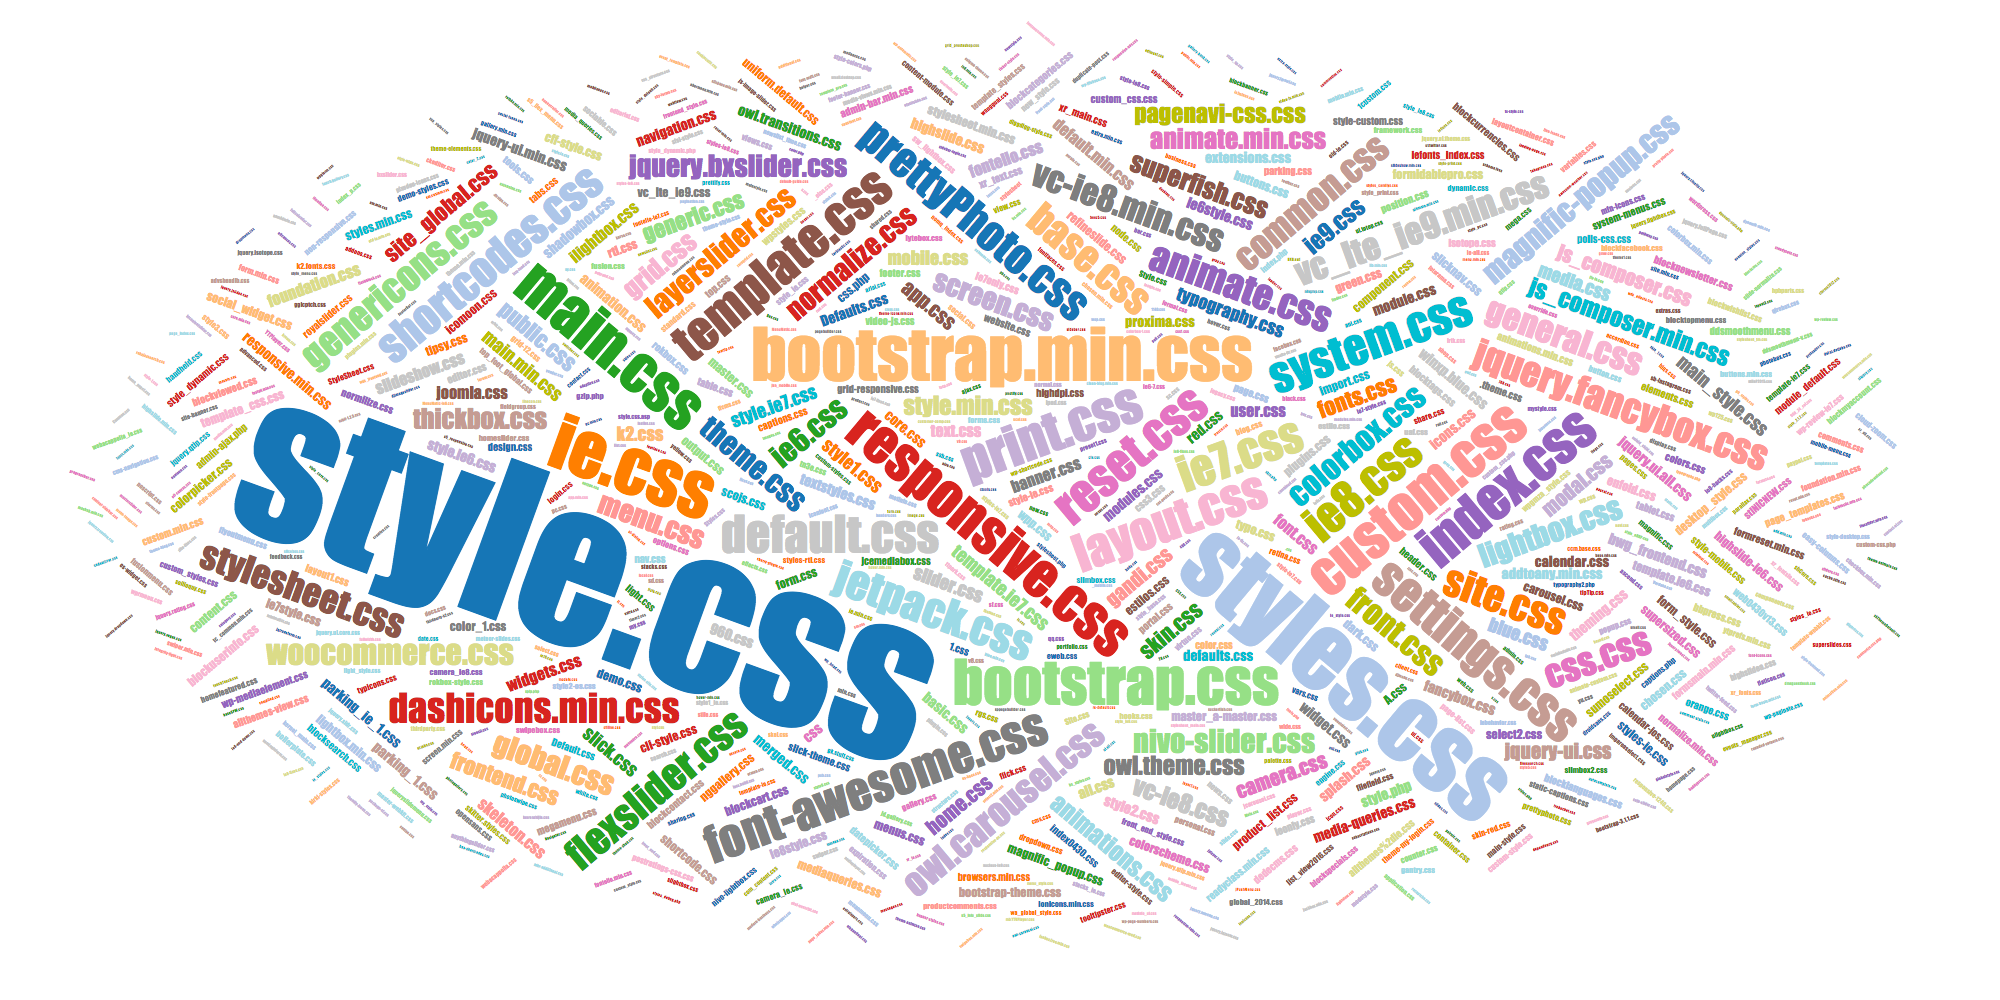 Popular names of CSS files quickshop.css, qtip.css, etc.